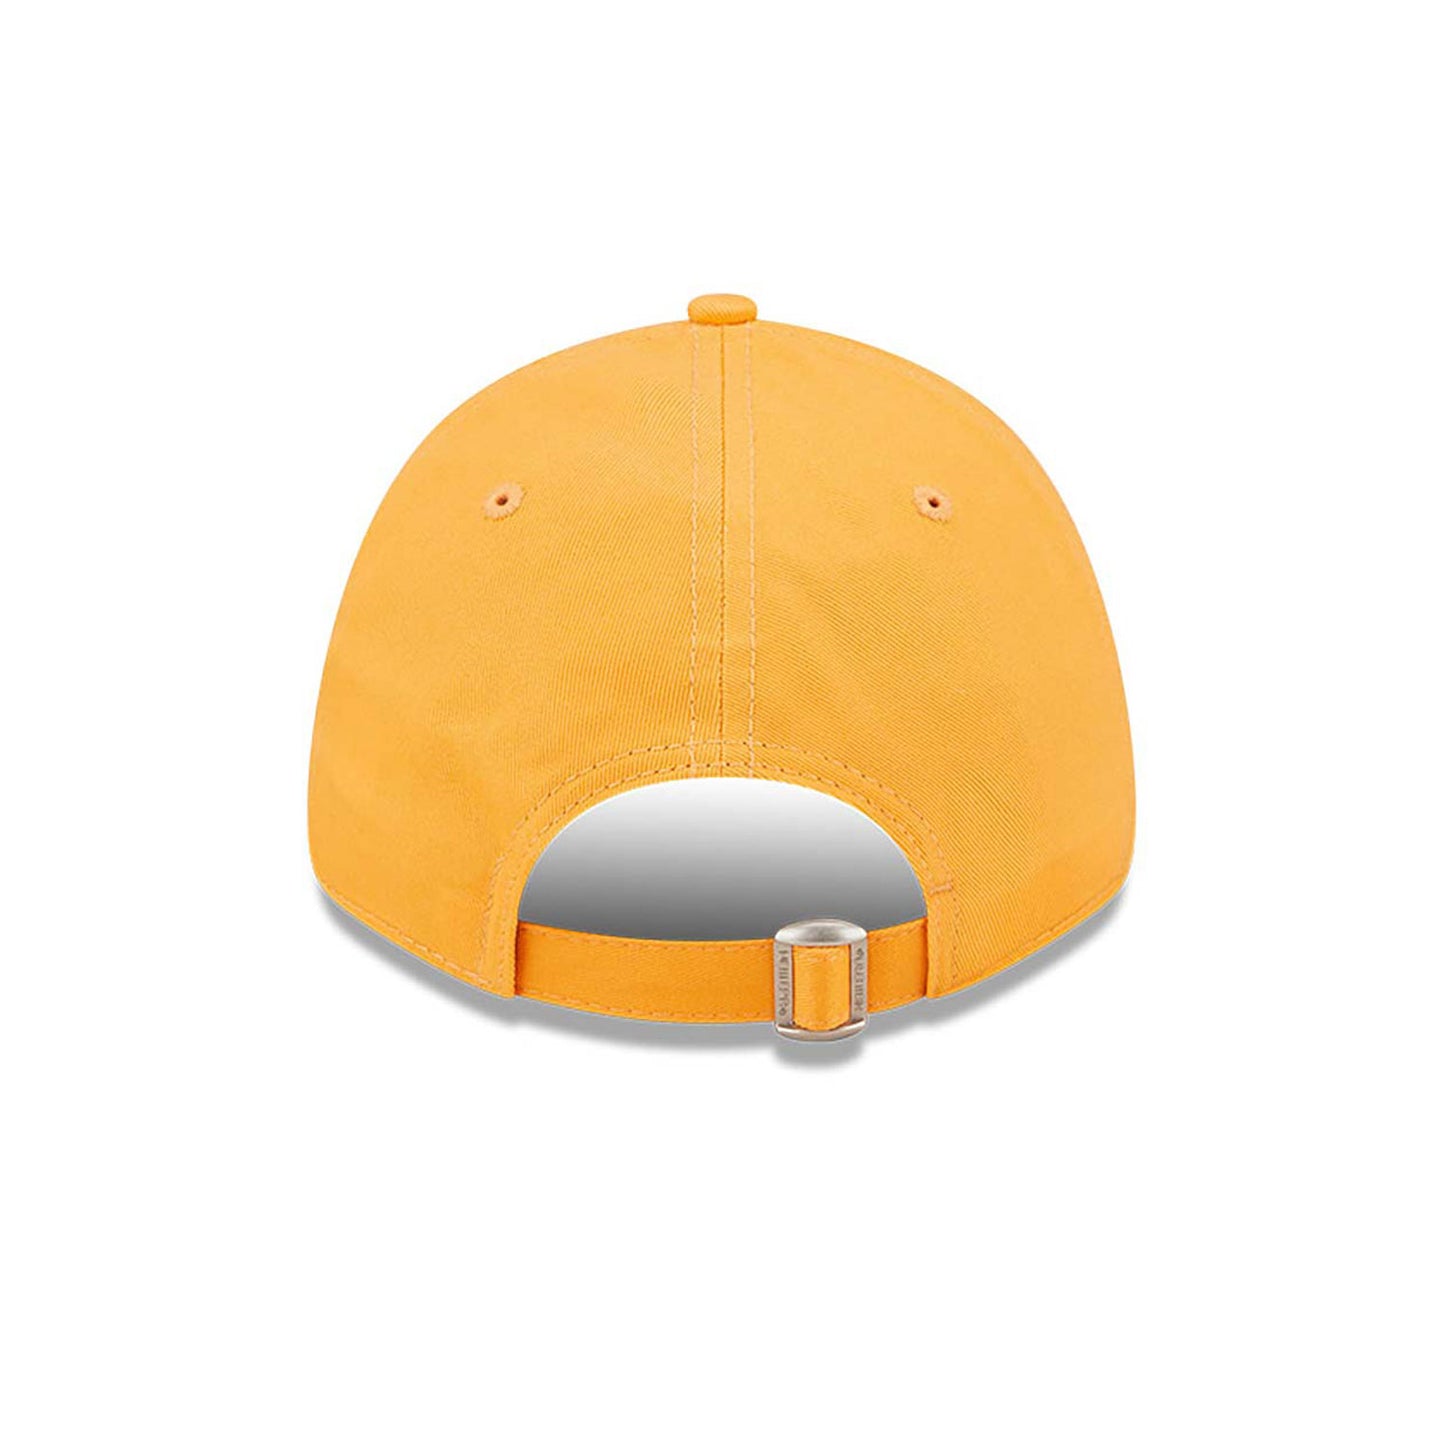 New Era Şapka - New York Yankees League Essential Orange 9FORTY Ayarlanabilir Şapka